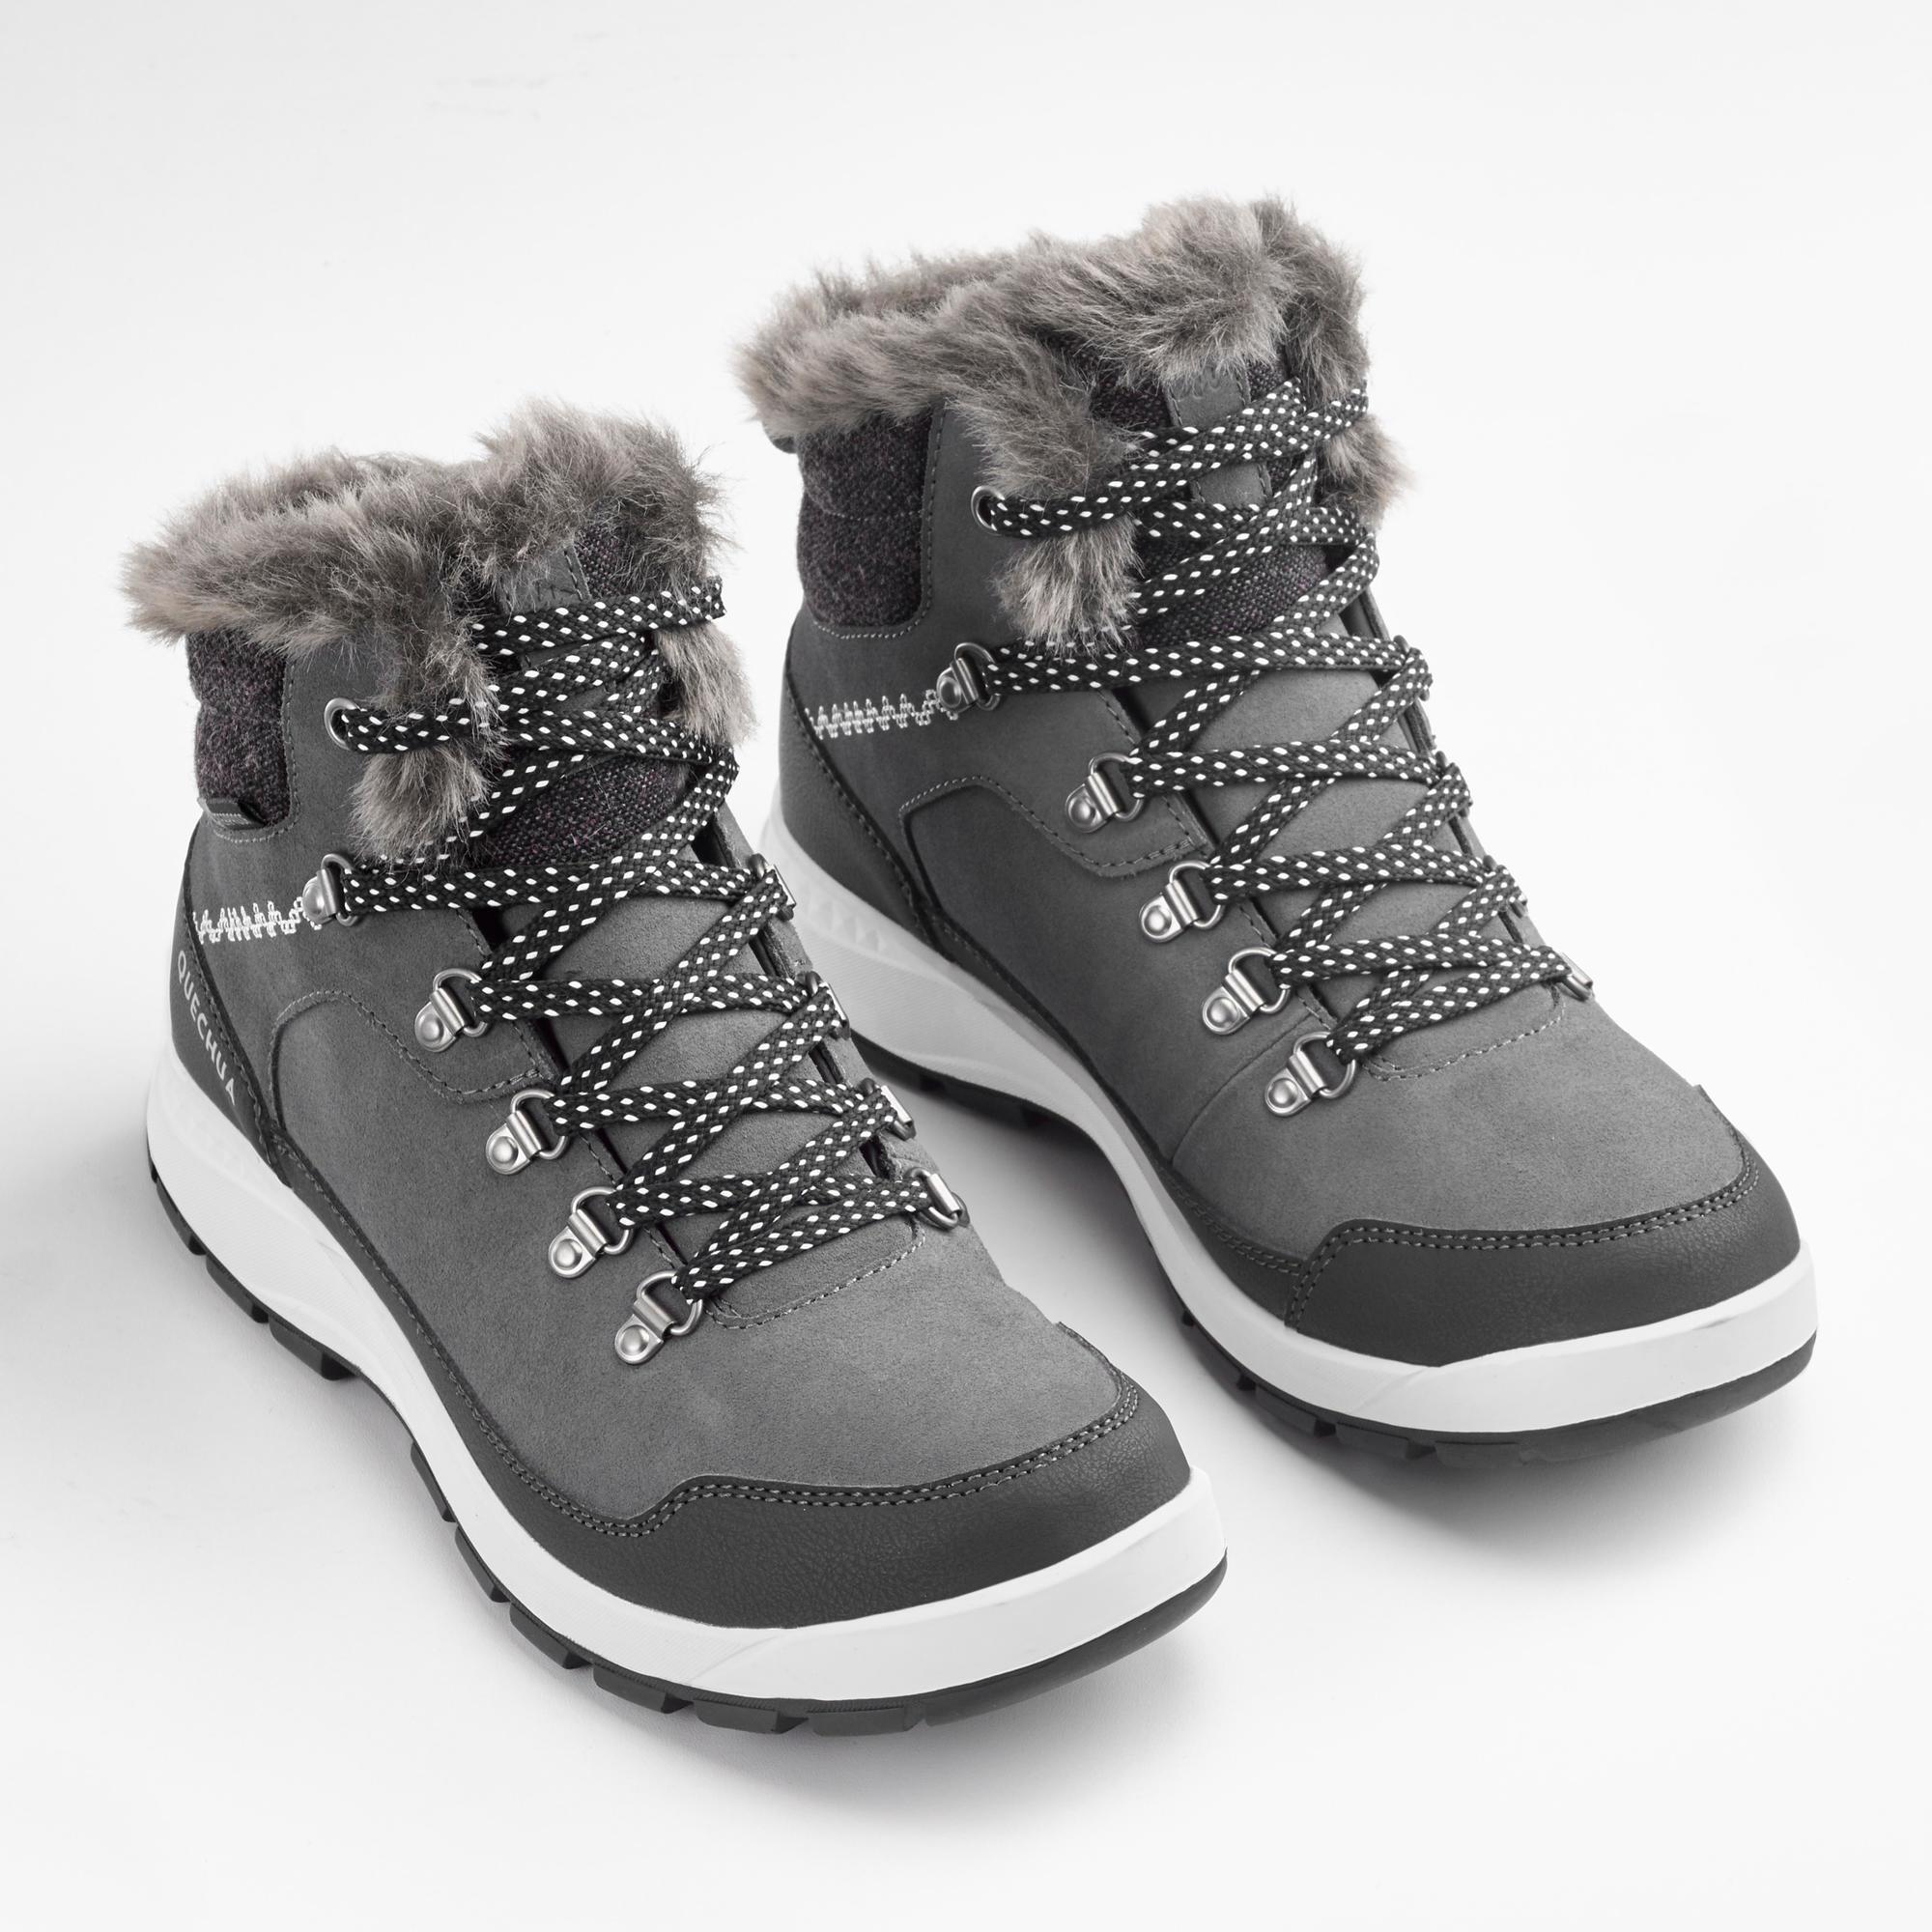 Women’s leather warm waterproof snow boots - SH900 Mid 2/7